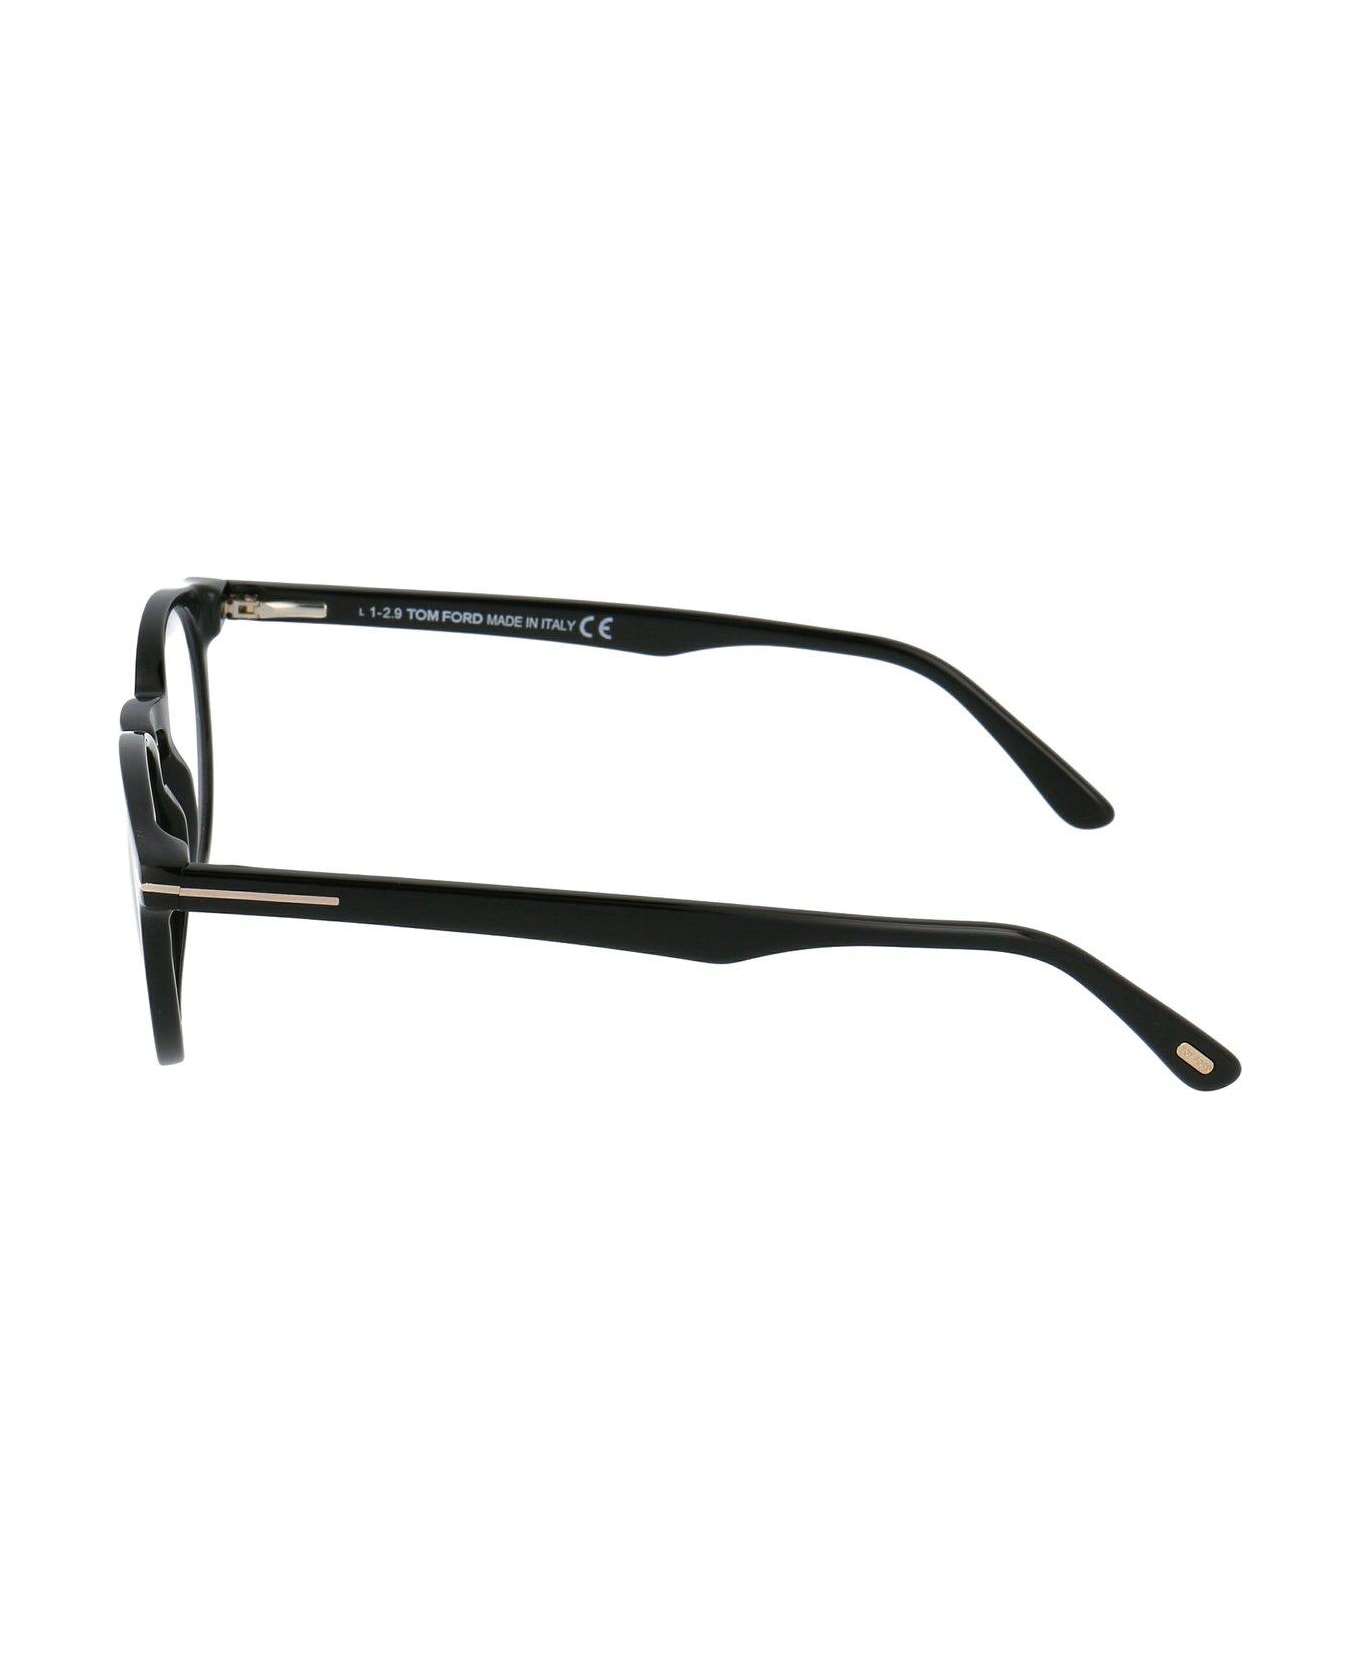 Tom Ford Eyewear Round Frame Glasses Glasses - 001 Nero Lucido